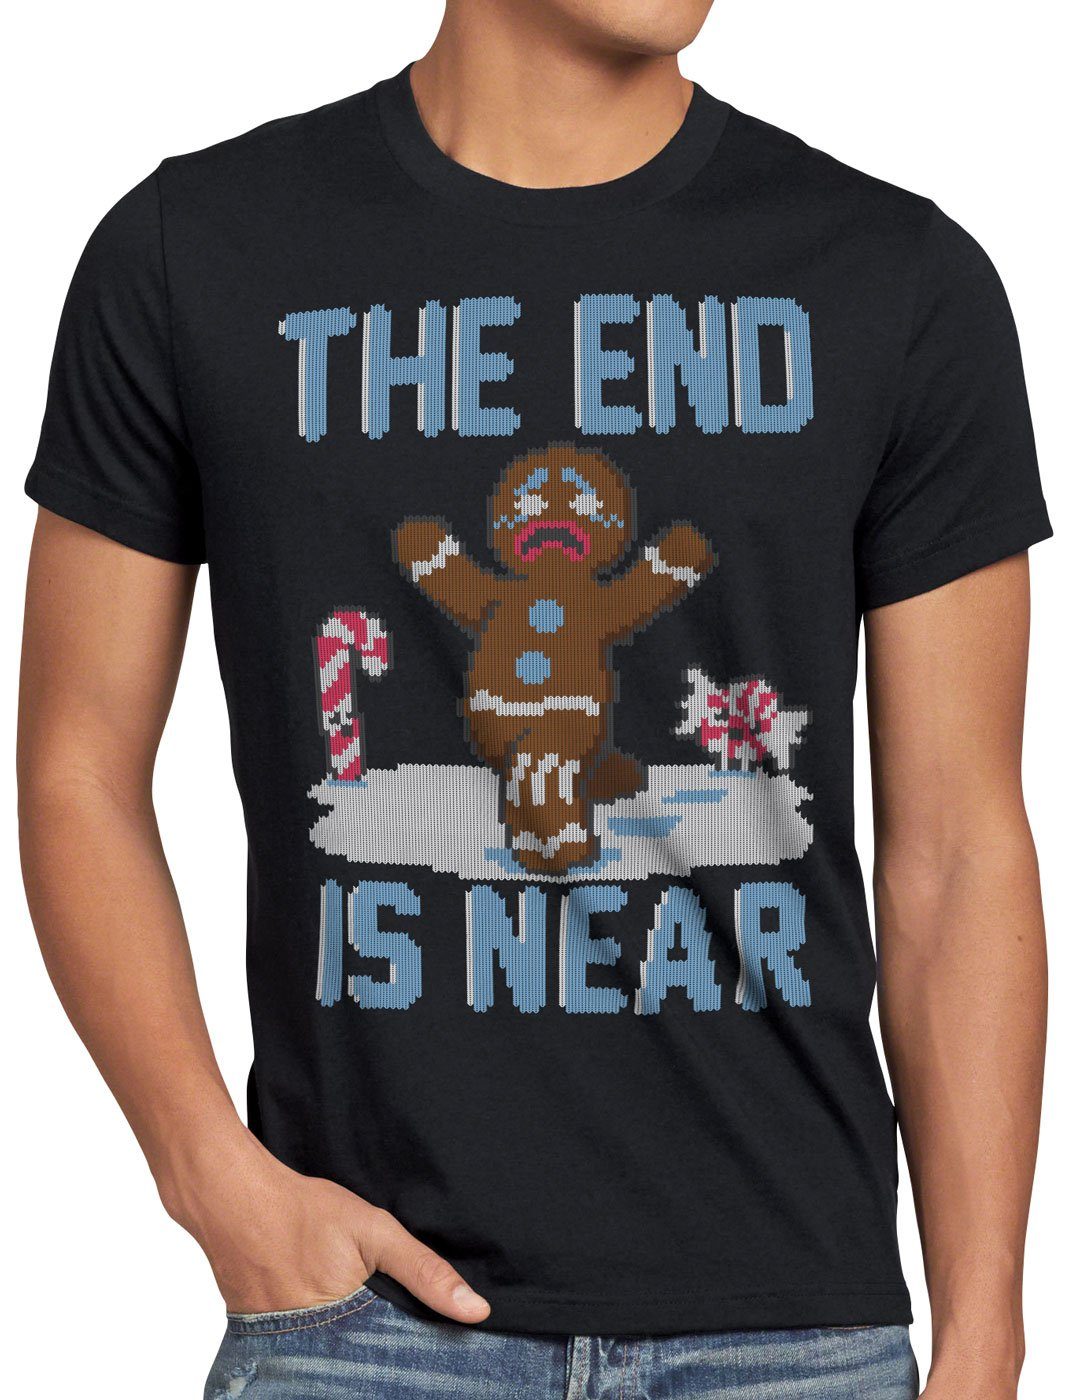 The T-Shirt style3 weihnachtsmarkt end Ugly Sweater near x-mas Print-Shirt pfefferkuchen Herren is pulli